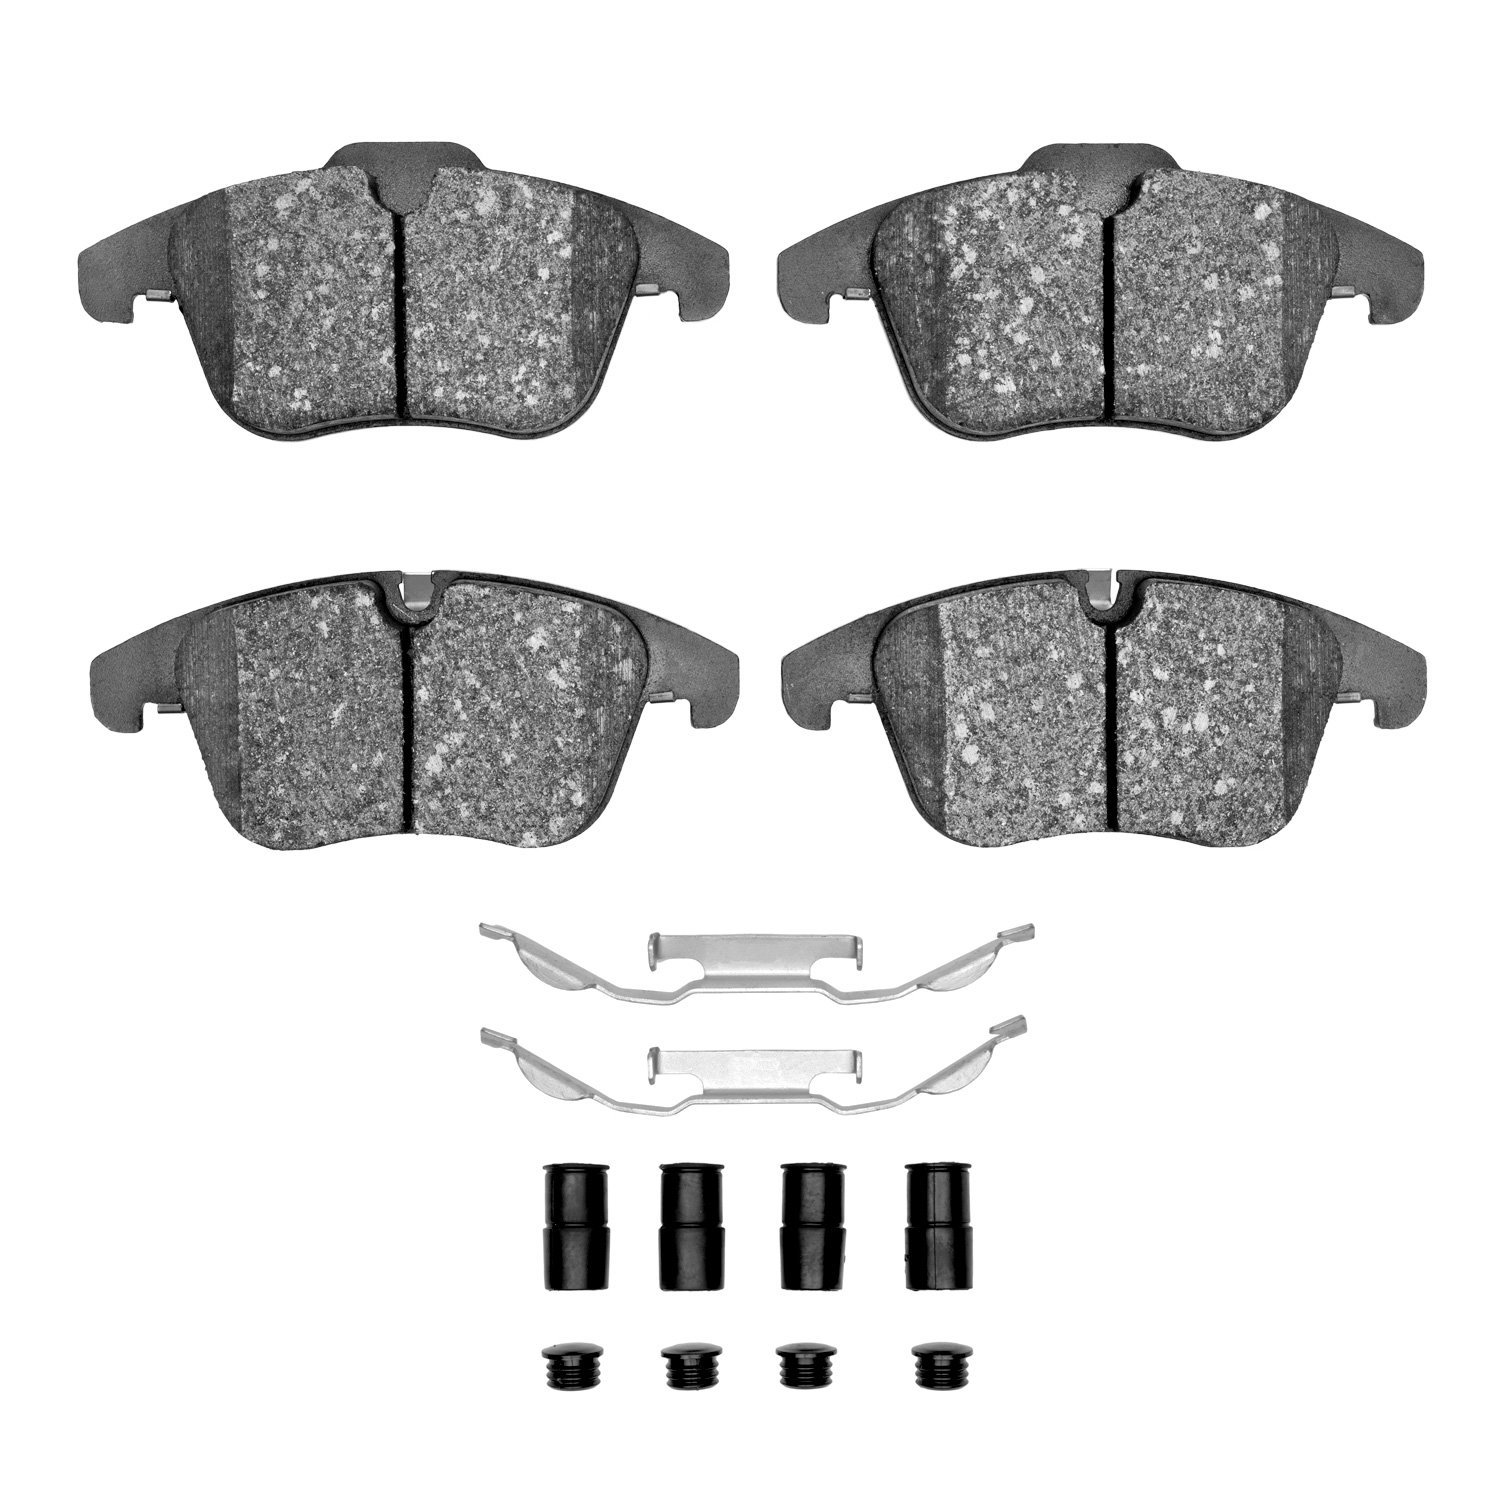 Euro Ceramic Brake Pads & Hardware Kit, 2006-2018 Fits Multiple Makes/Models, Position: Front